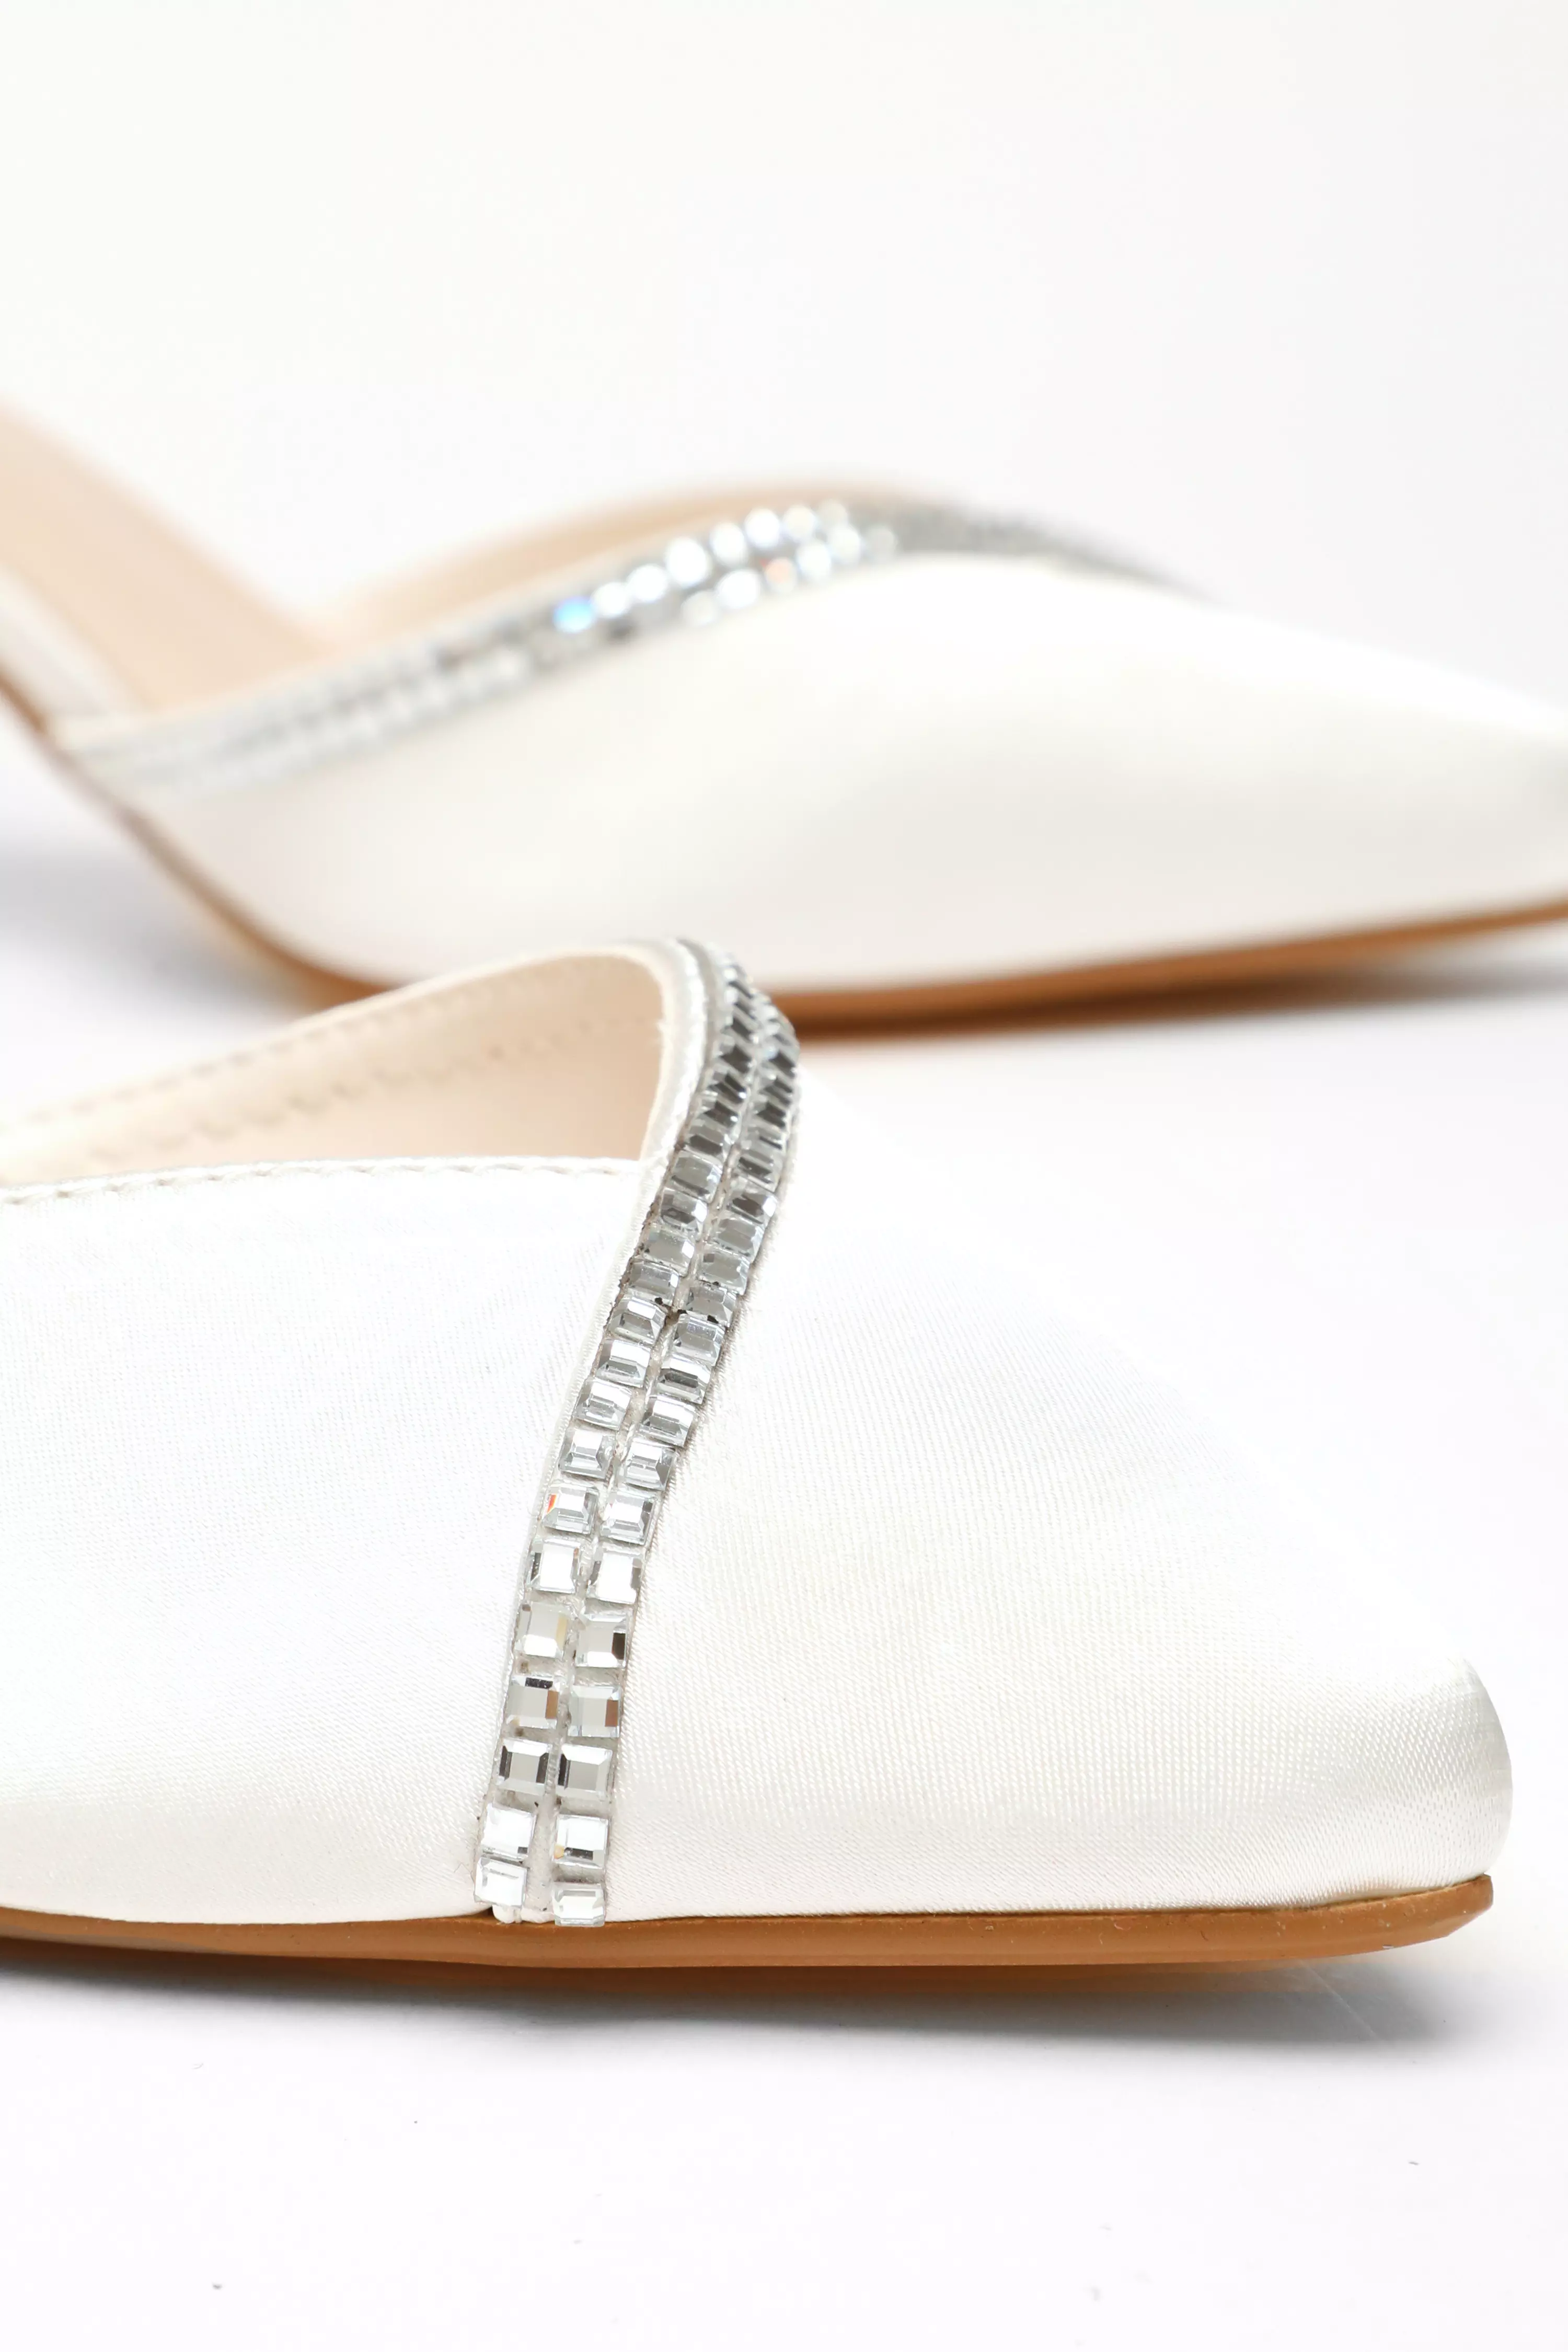 Bridal Satin Diamante Asymmetric Court Heels